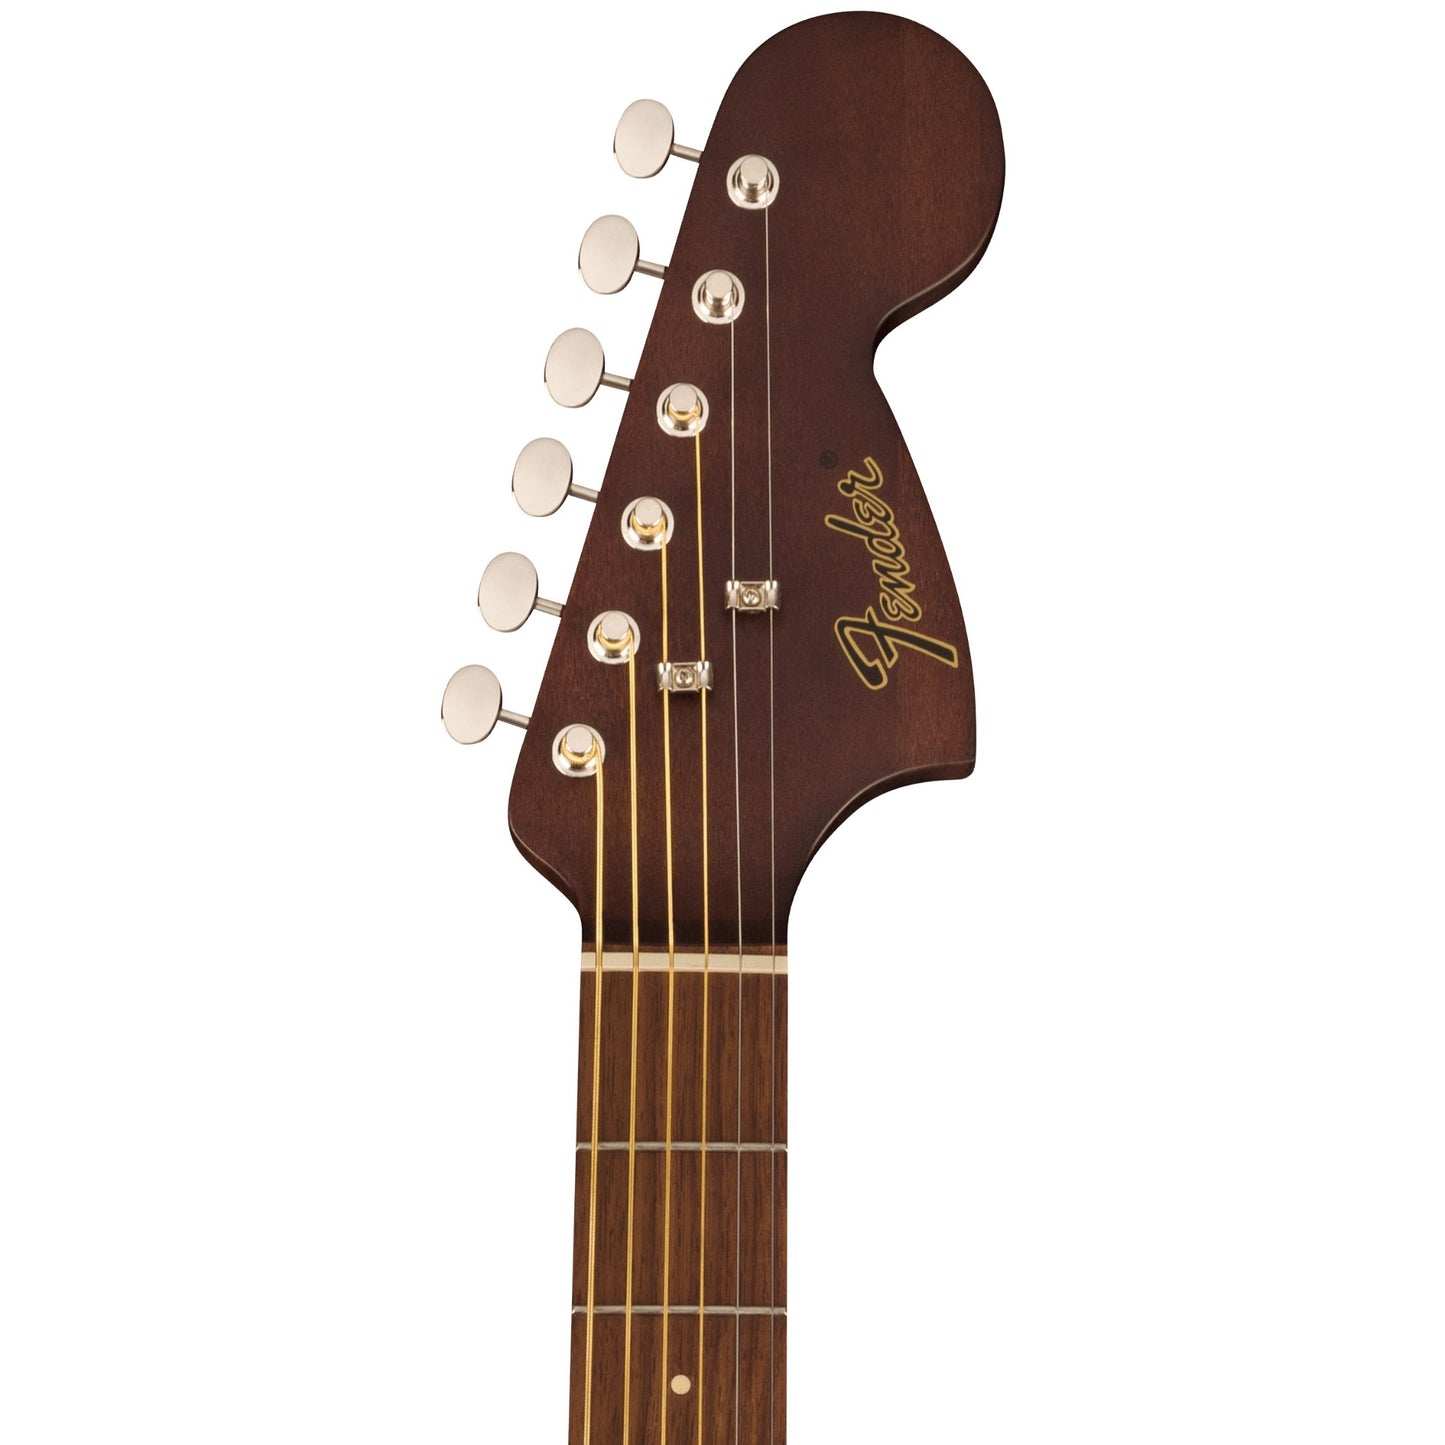 Fender Monterey Standard Acoustic Electric Guitar - Natural, Walnut Fingerboard